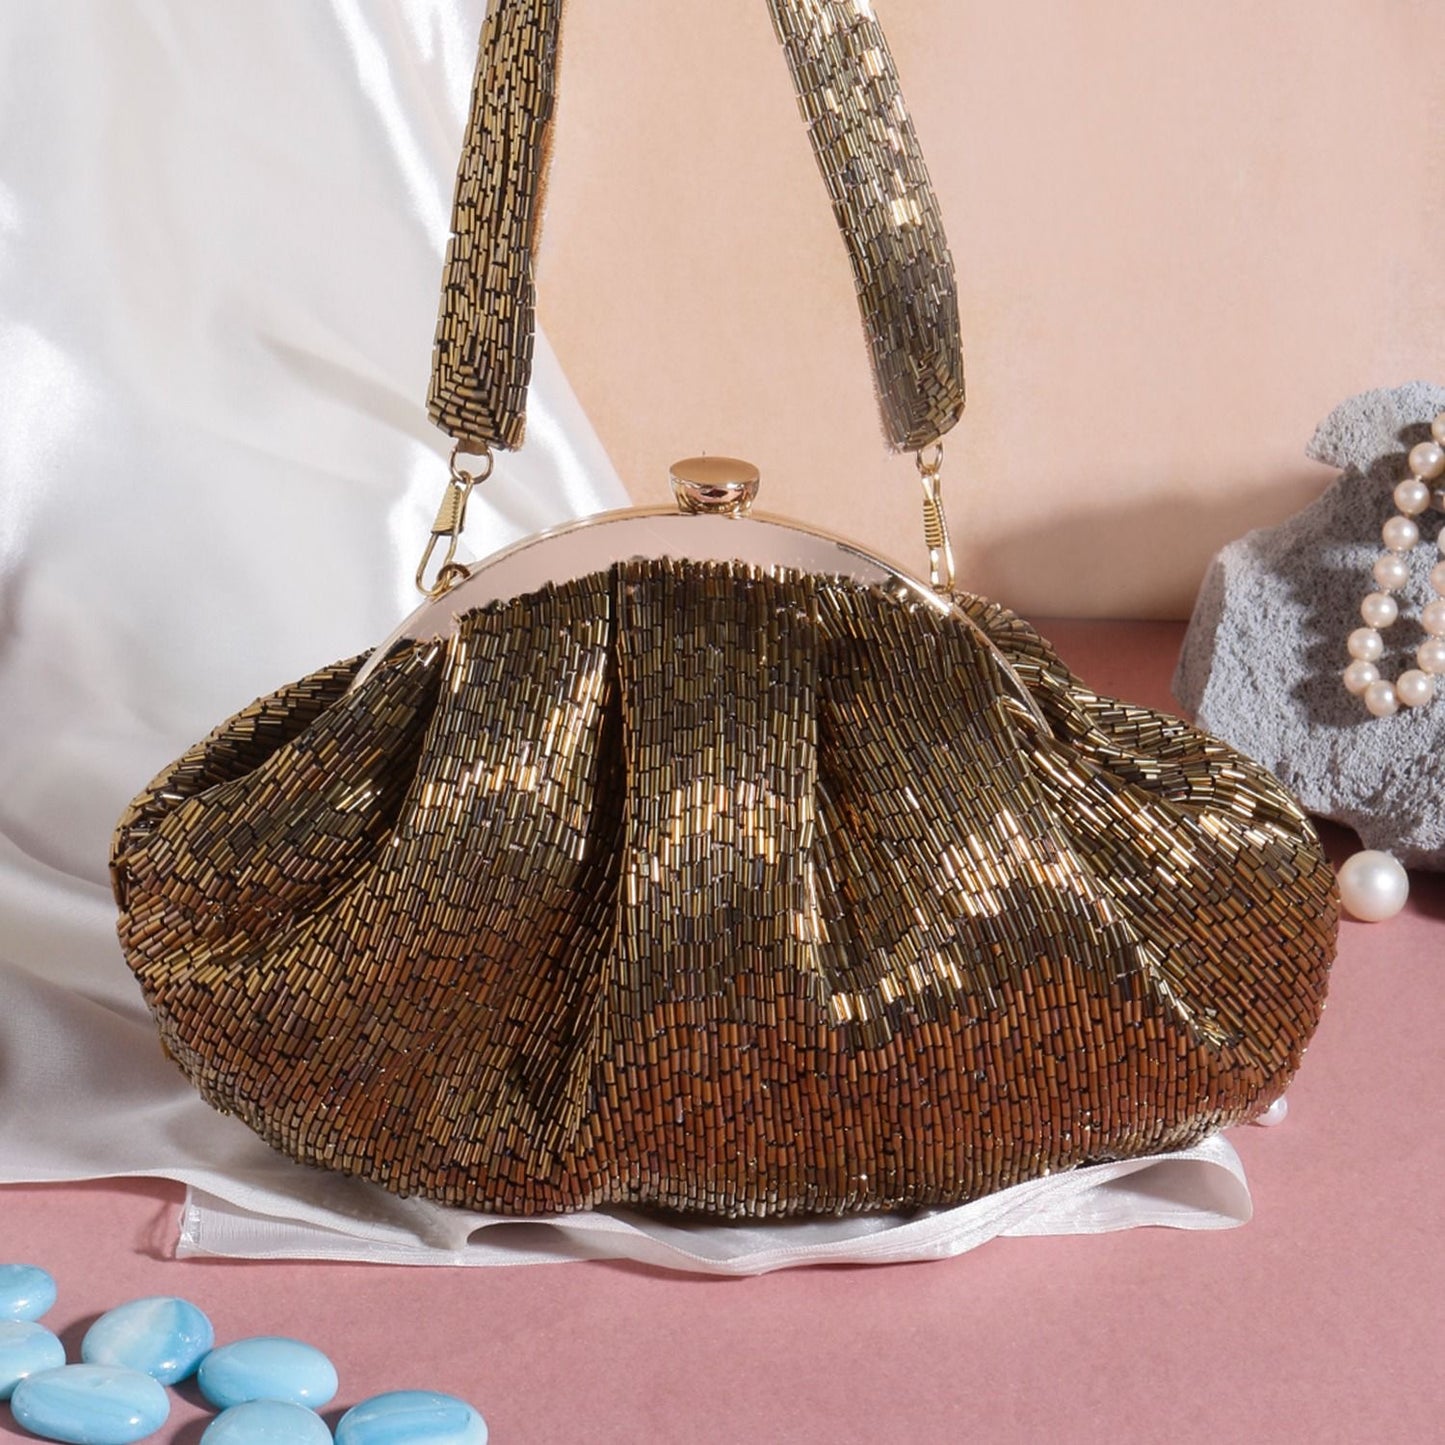 Illuminati inspired clutch bag handbags